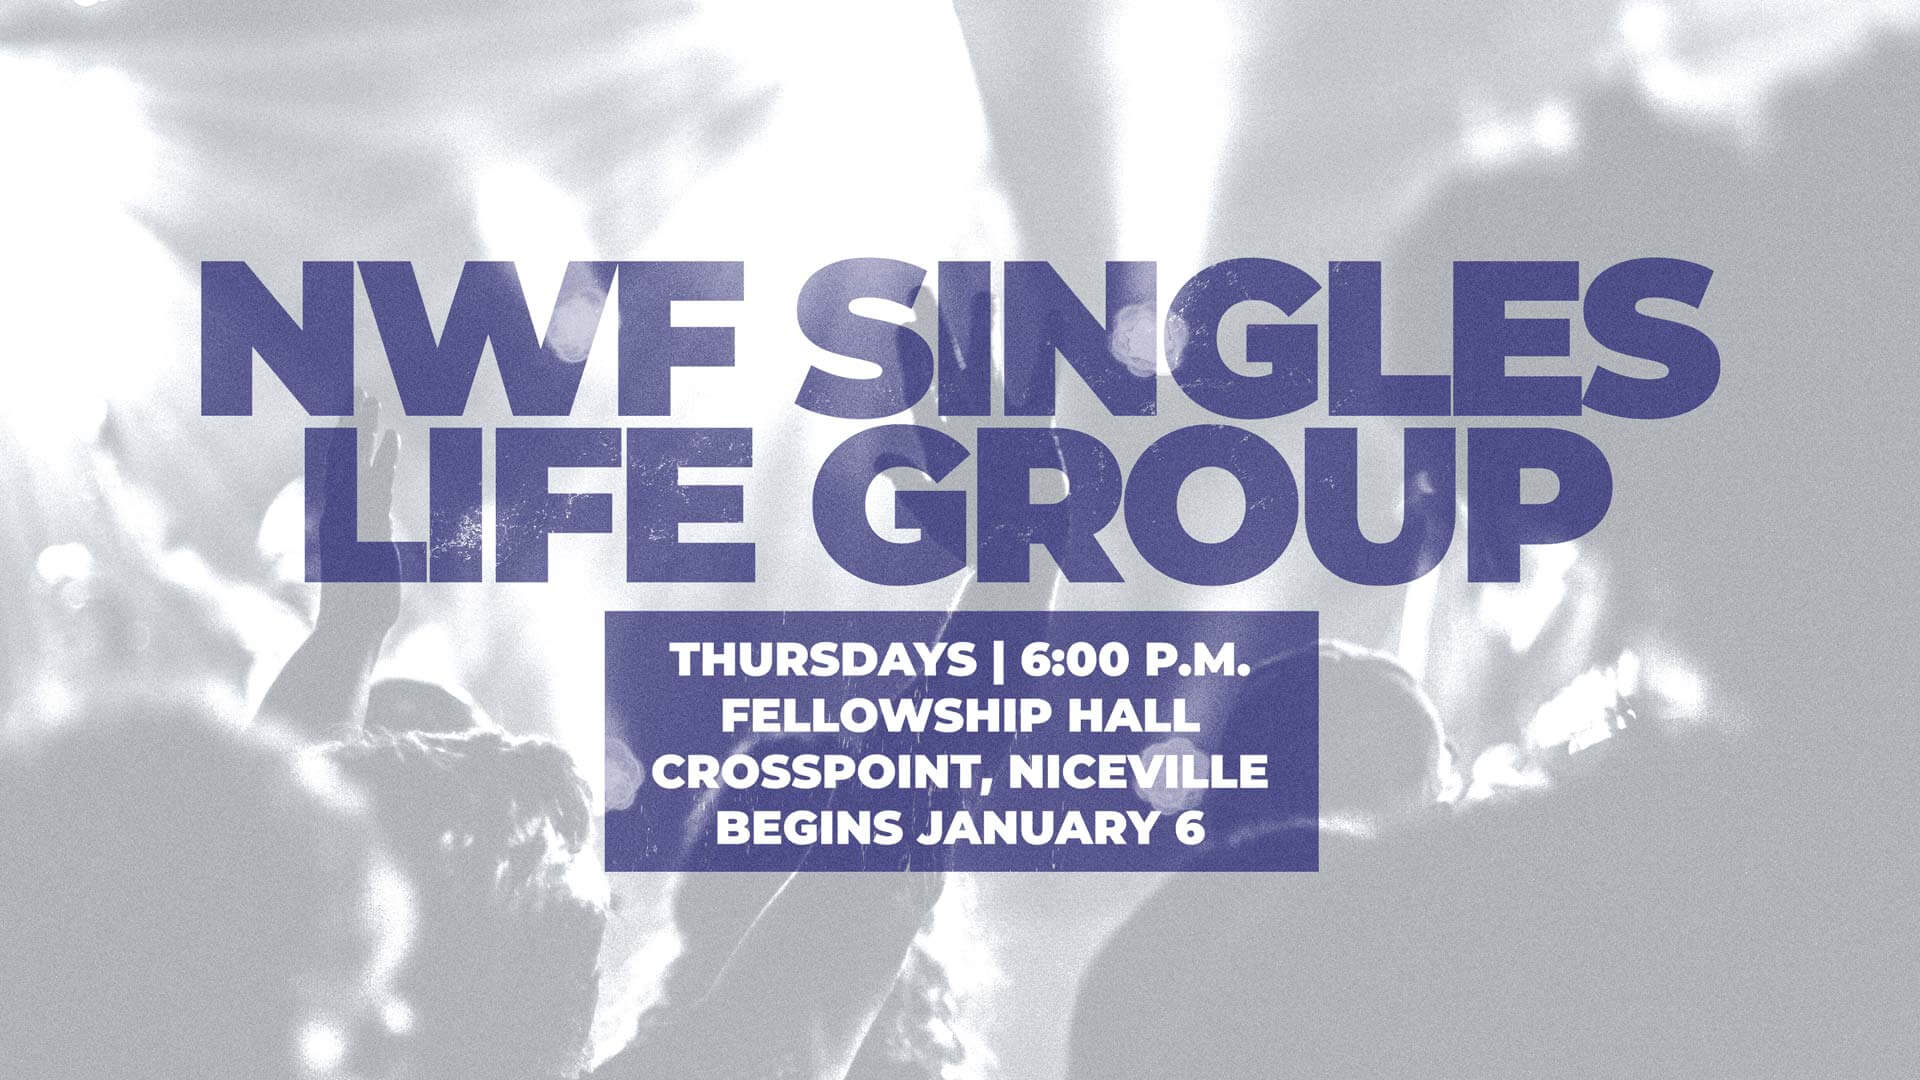 Northwest Florida Singles Life Groups, Thursdays at 6:00 p.m. in Fellowship Hall, Crosspoint, Niceville, beginning January 6